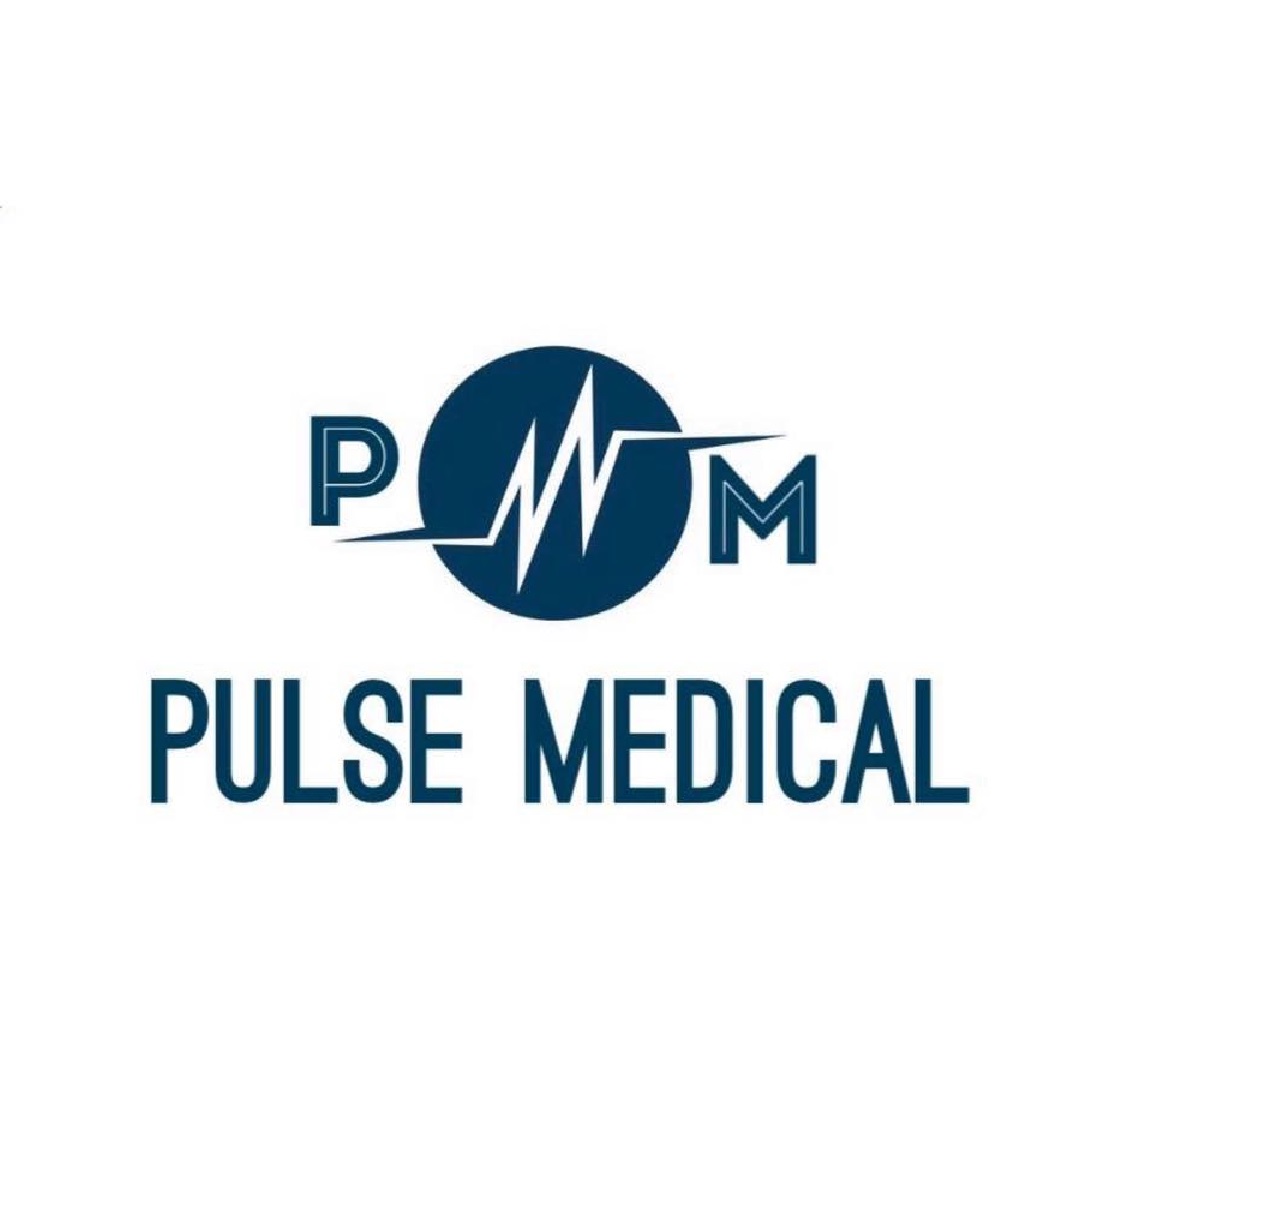 Pulse medical